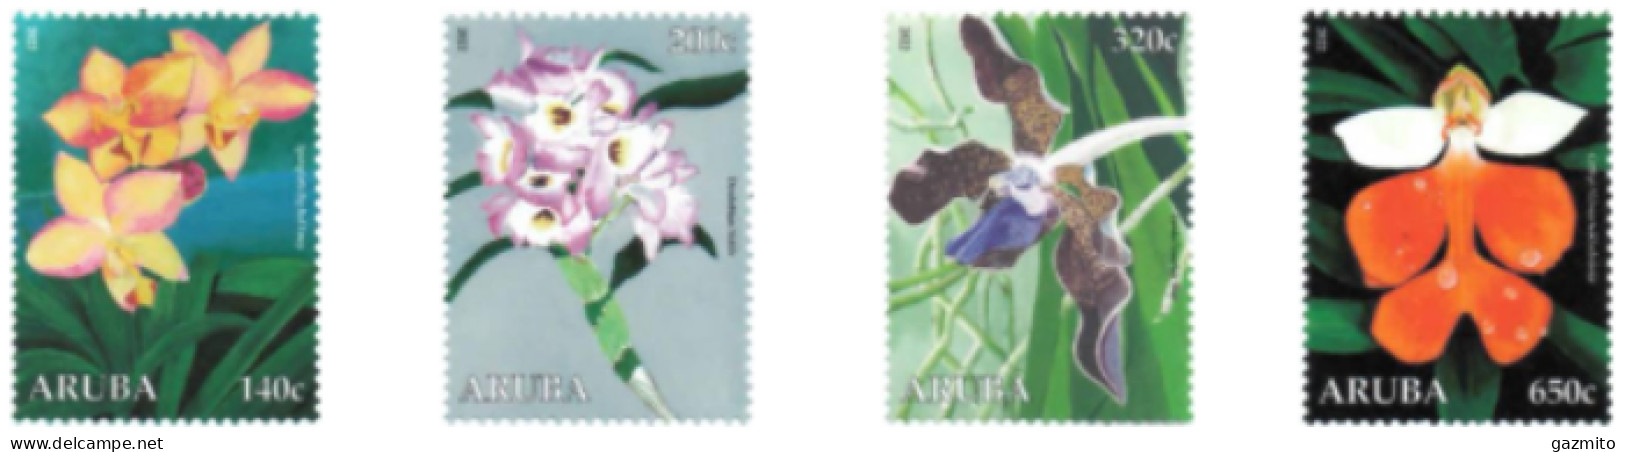 Aruba 2022, Orchids, 4val - Niederländische Antillen, Curaçao, Aruba